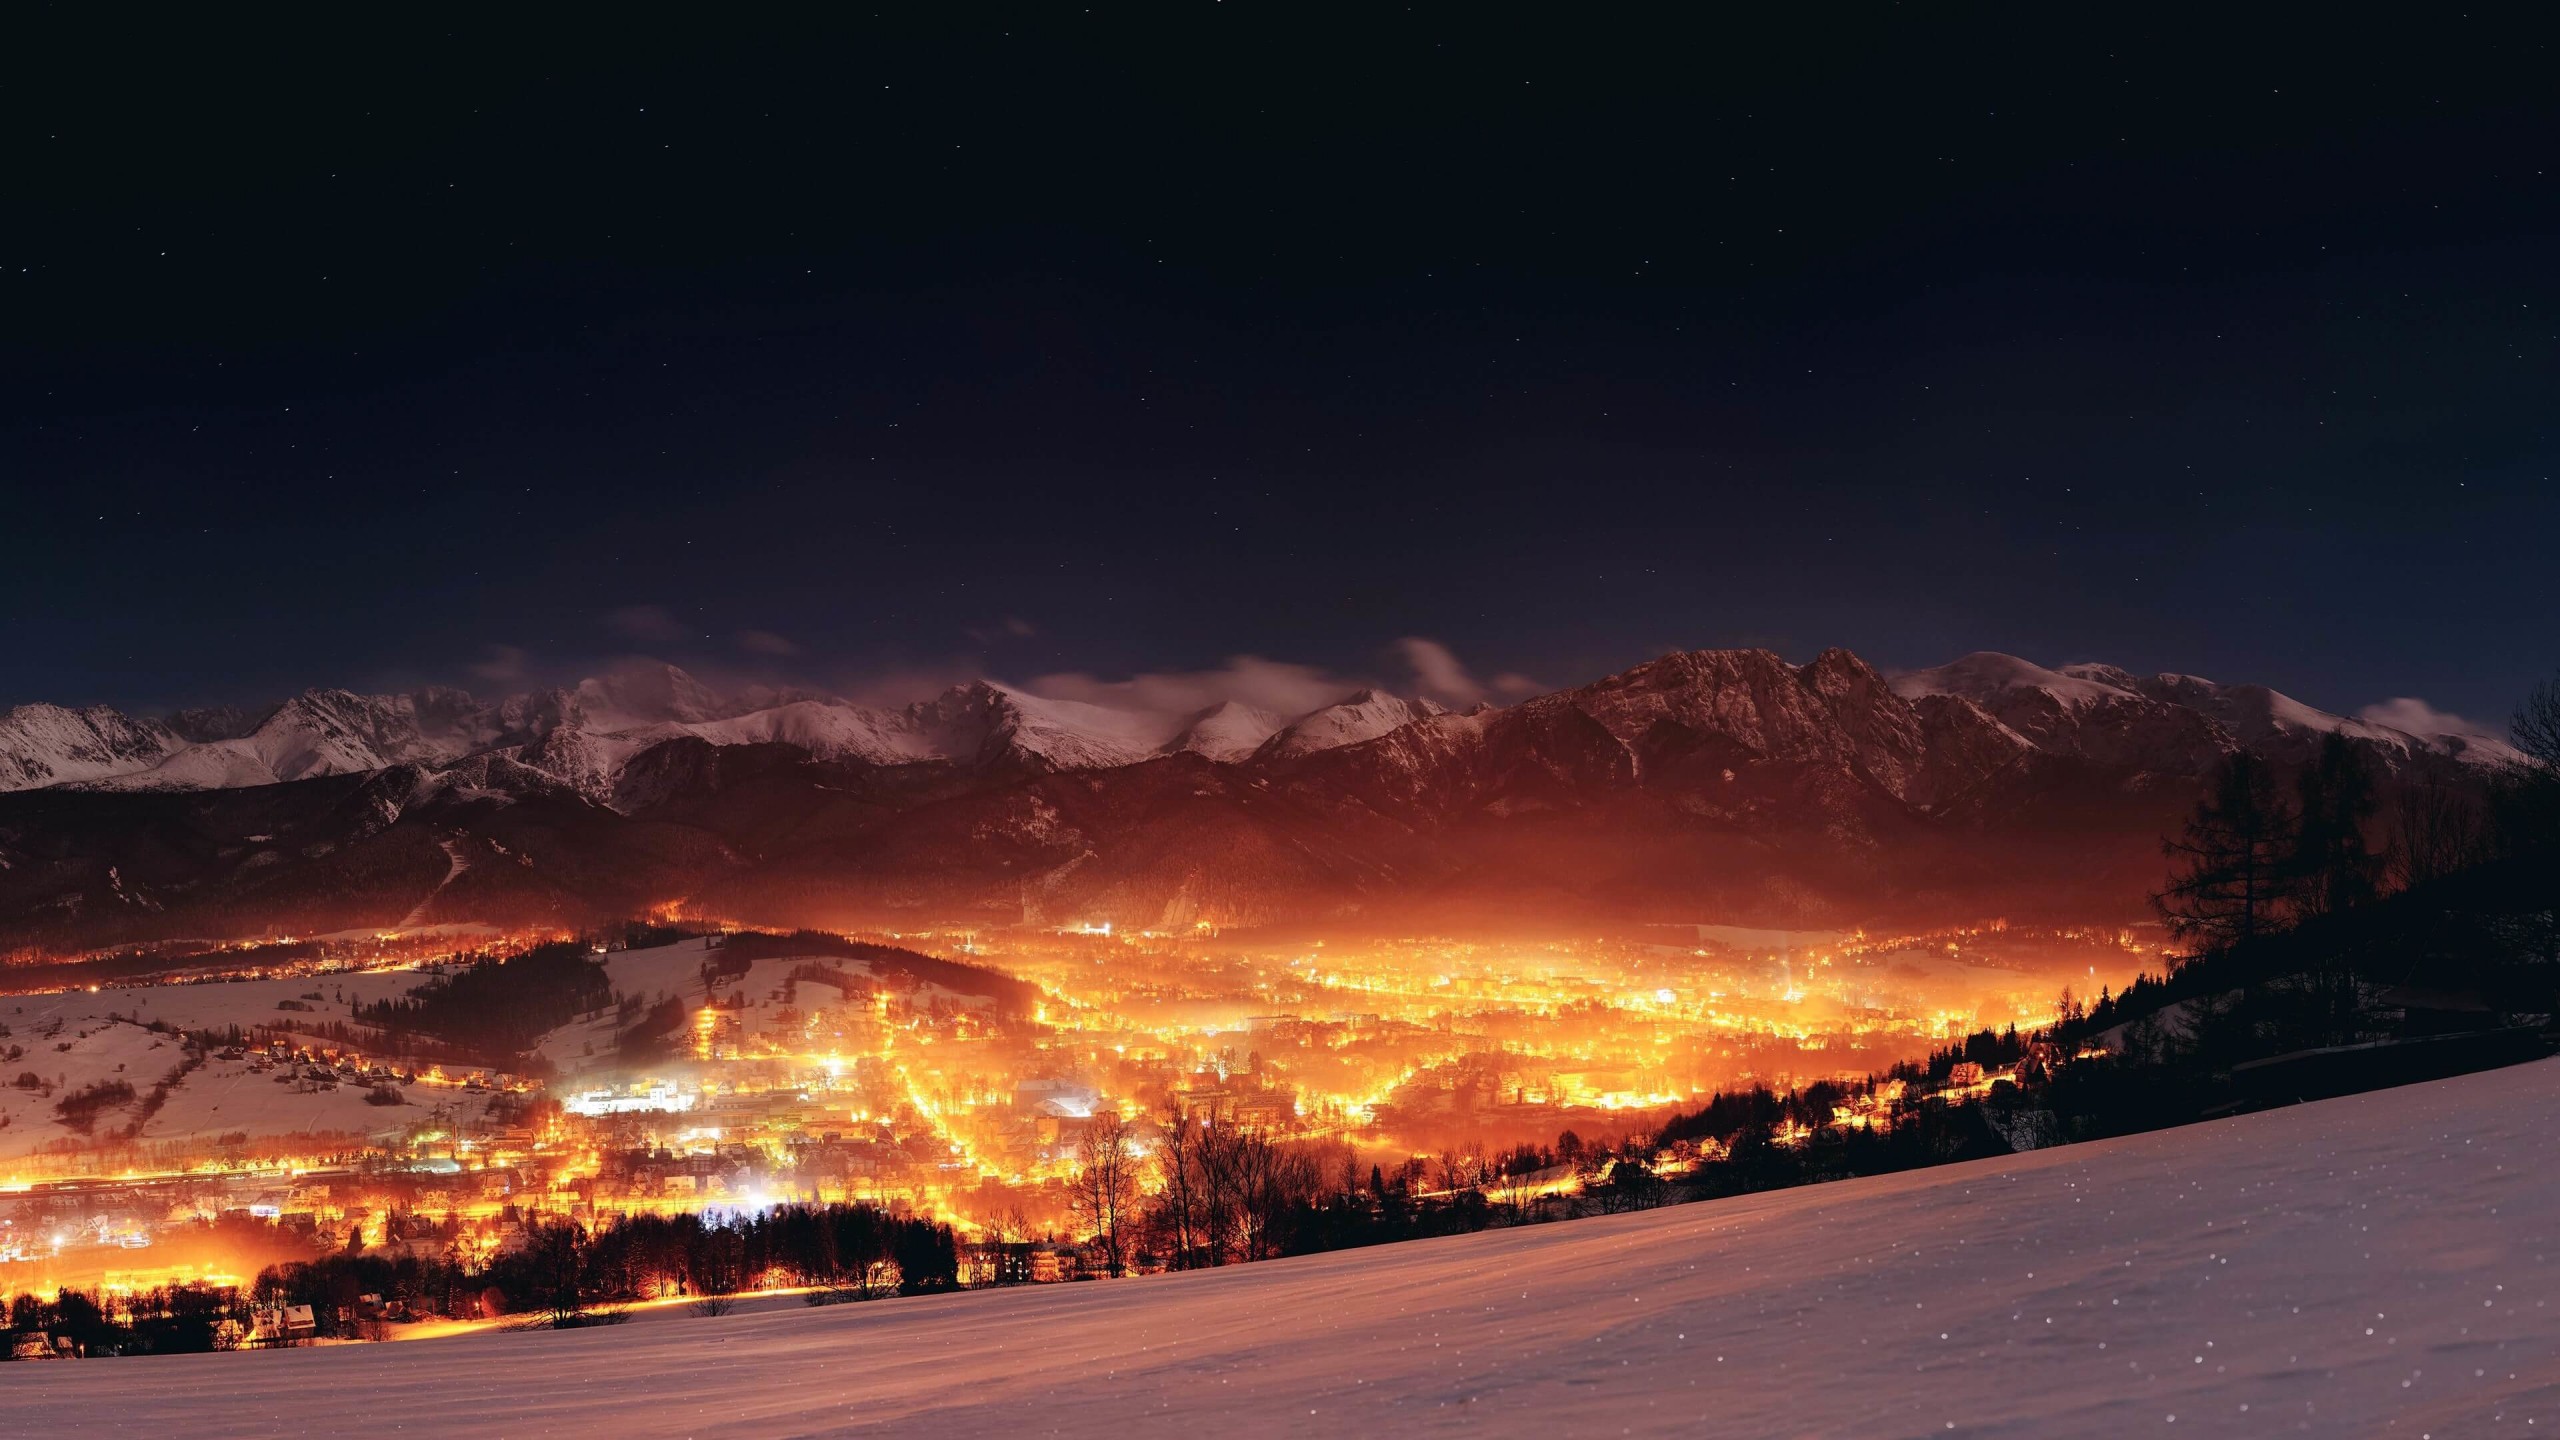 Zakopane City At Night - Poland Wallpaper for Desktop 2560x1440